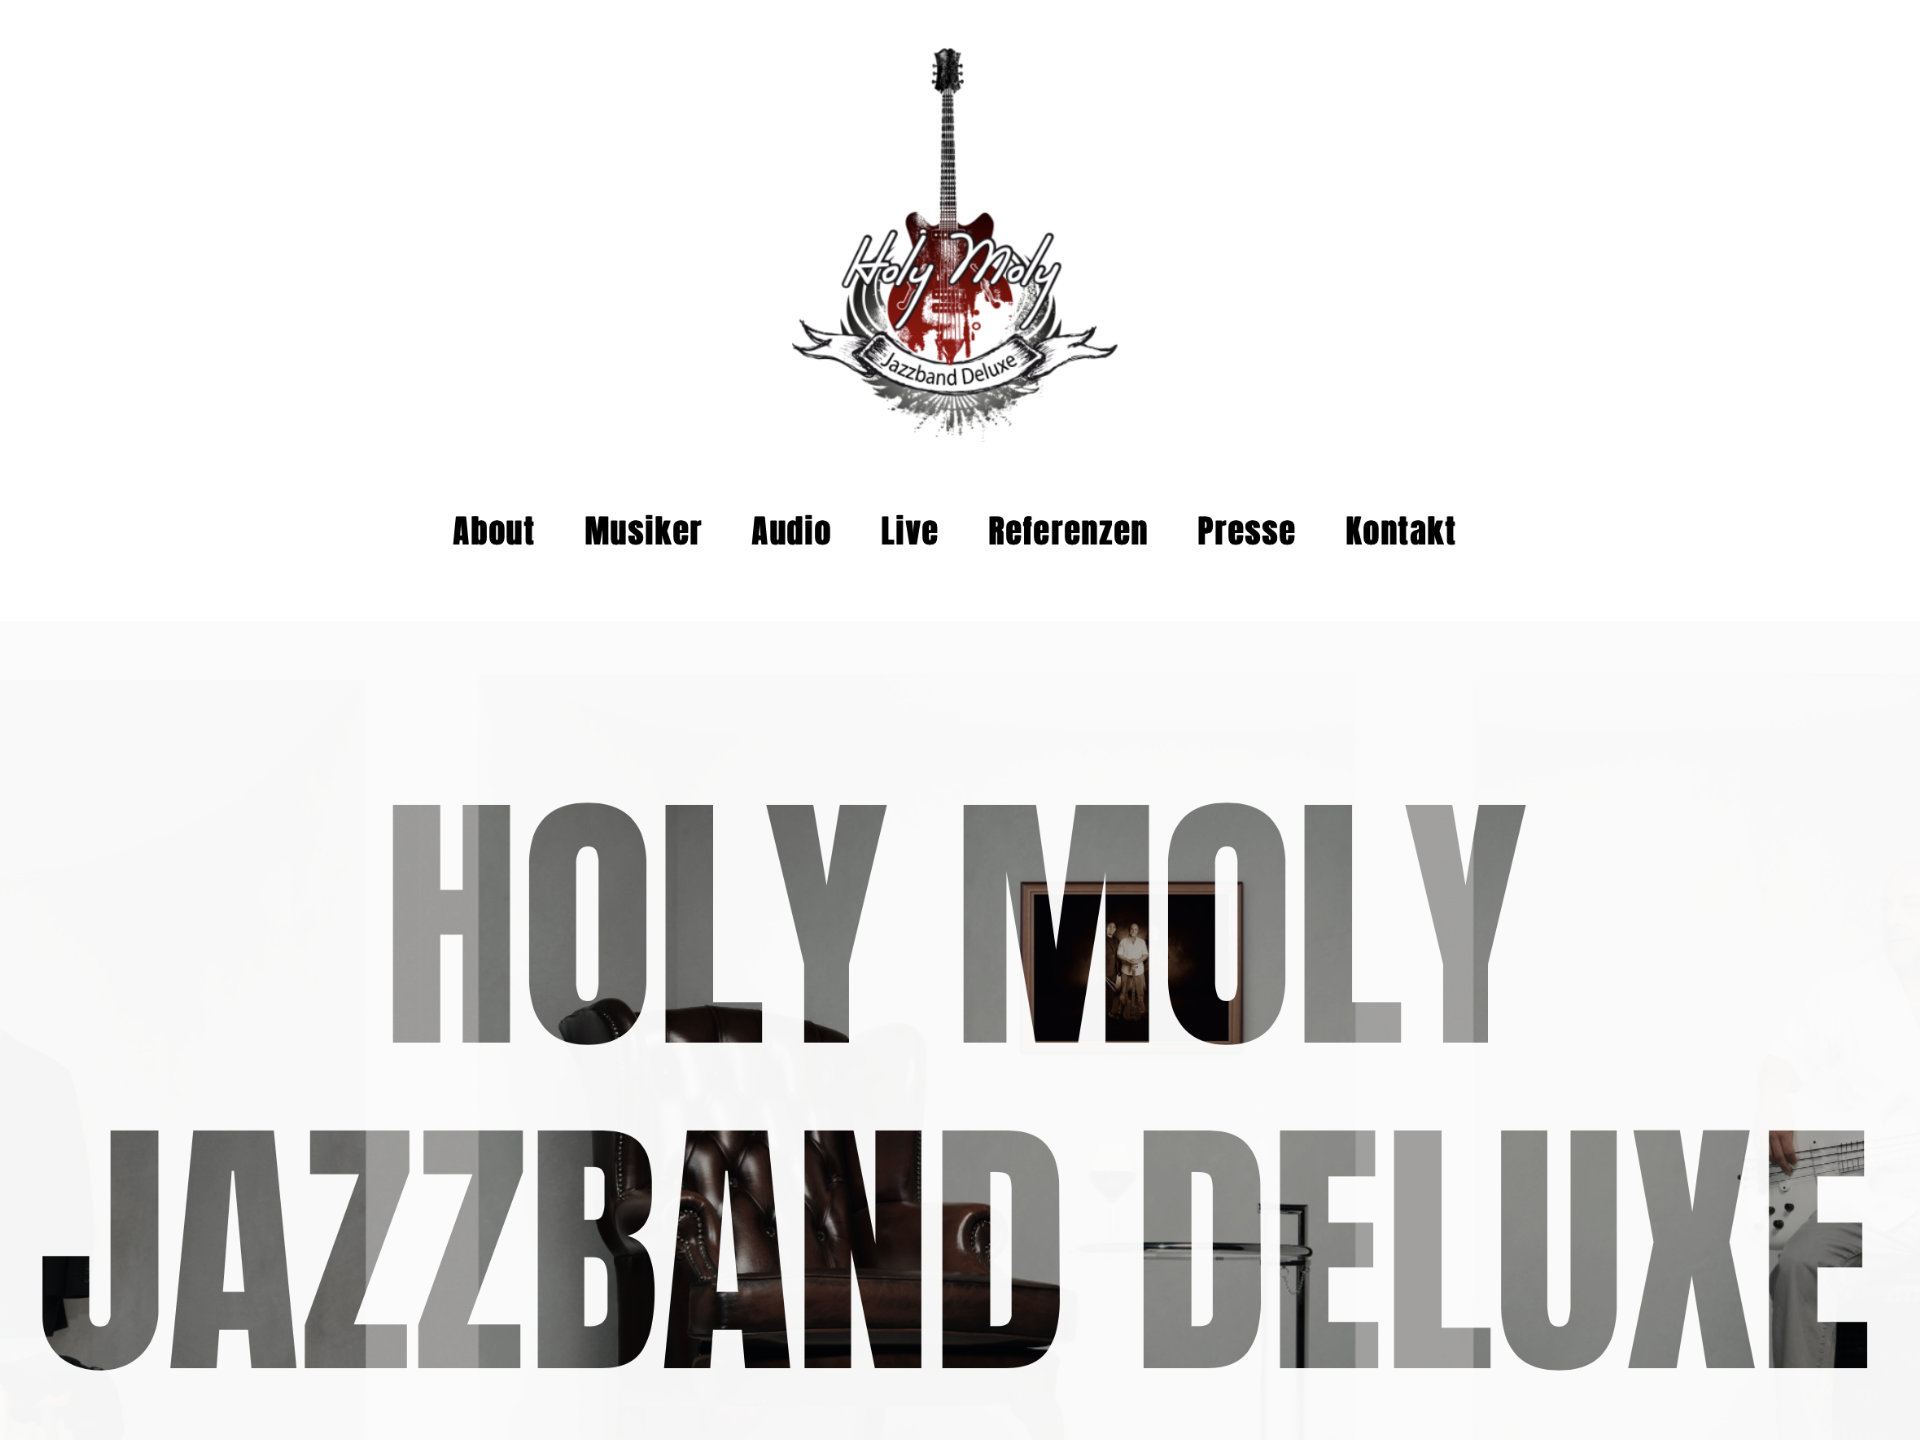 Holy Moly Jazzband Website Screenshot